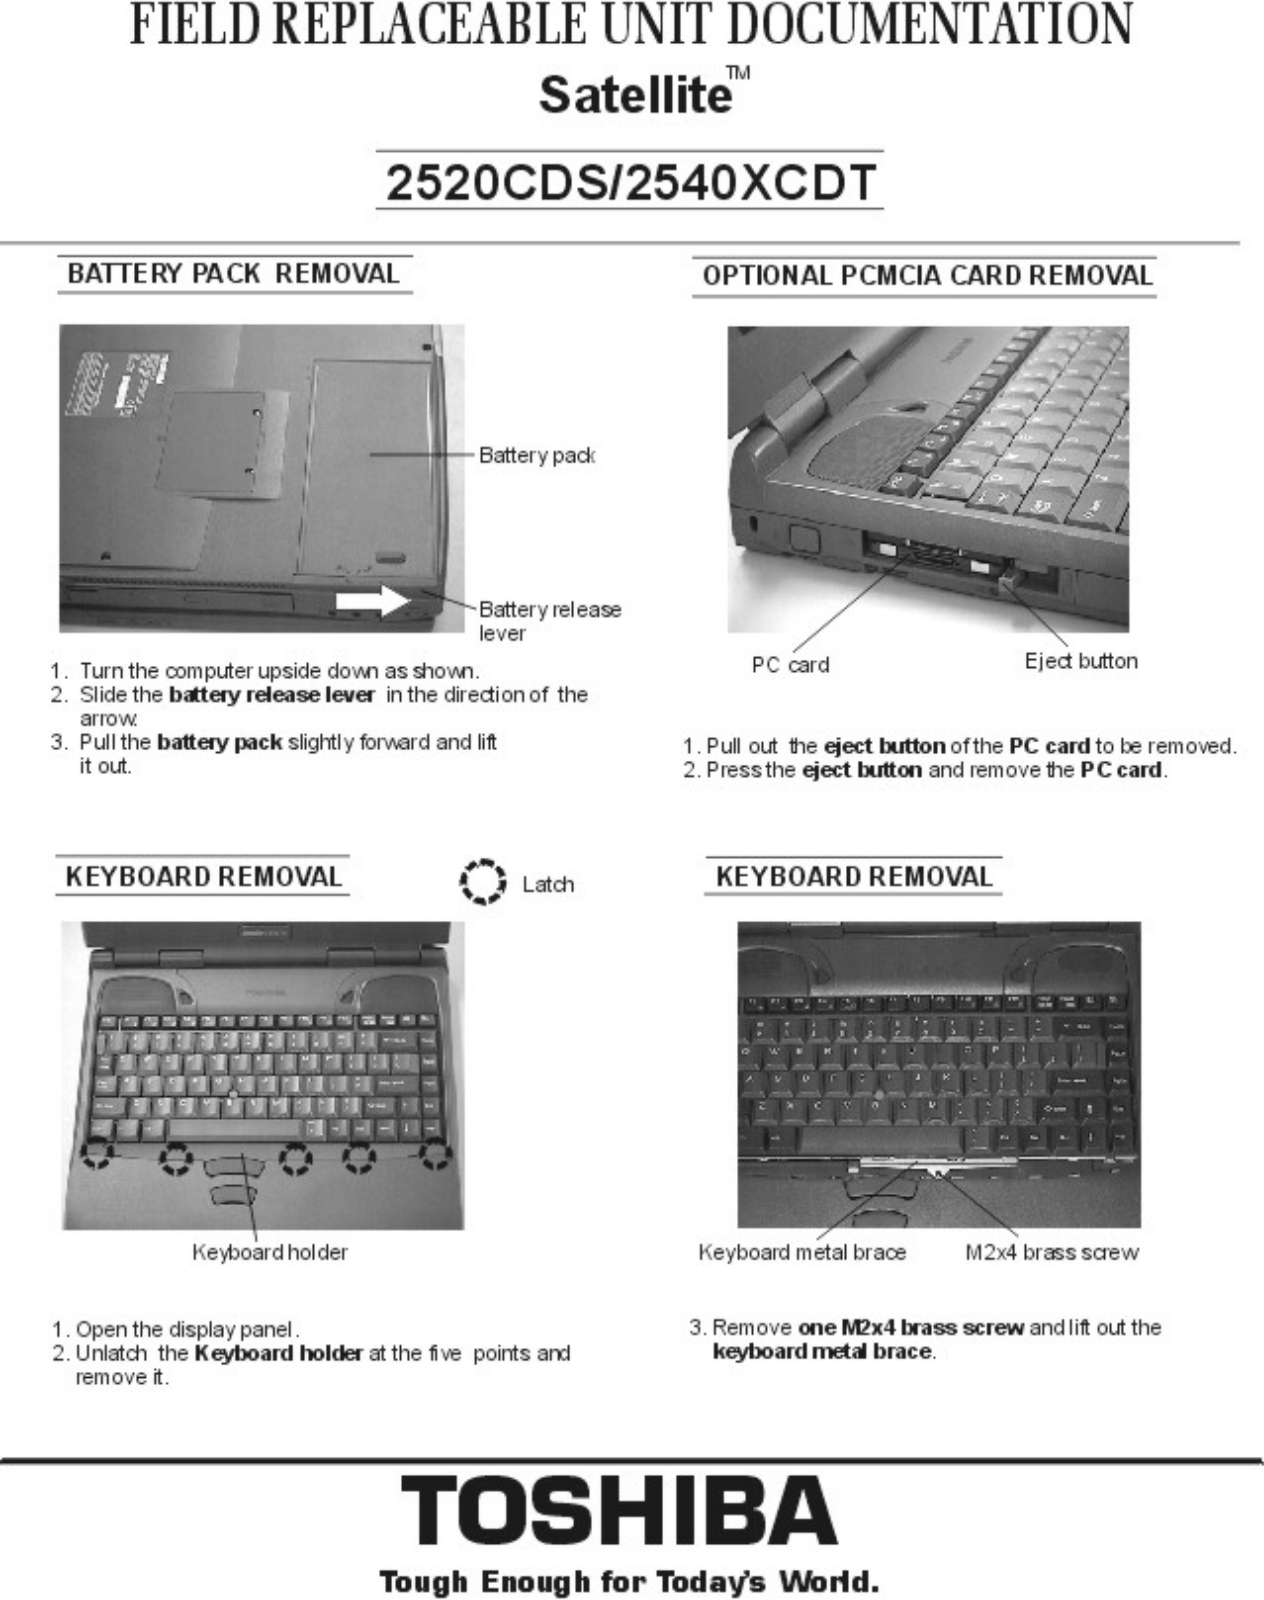 Toshiba Satellite 2540XCDT, Satellite 2520CDS Service Manual